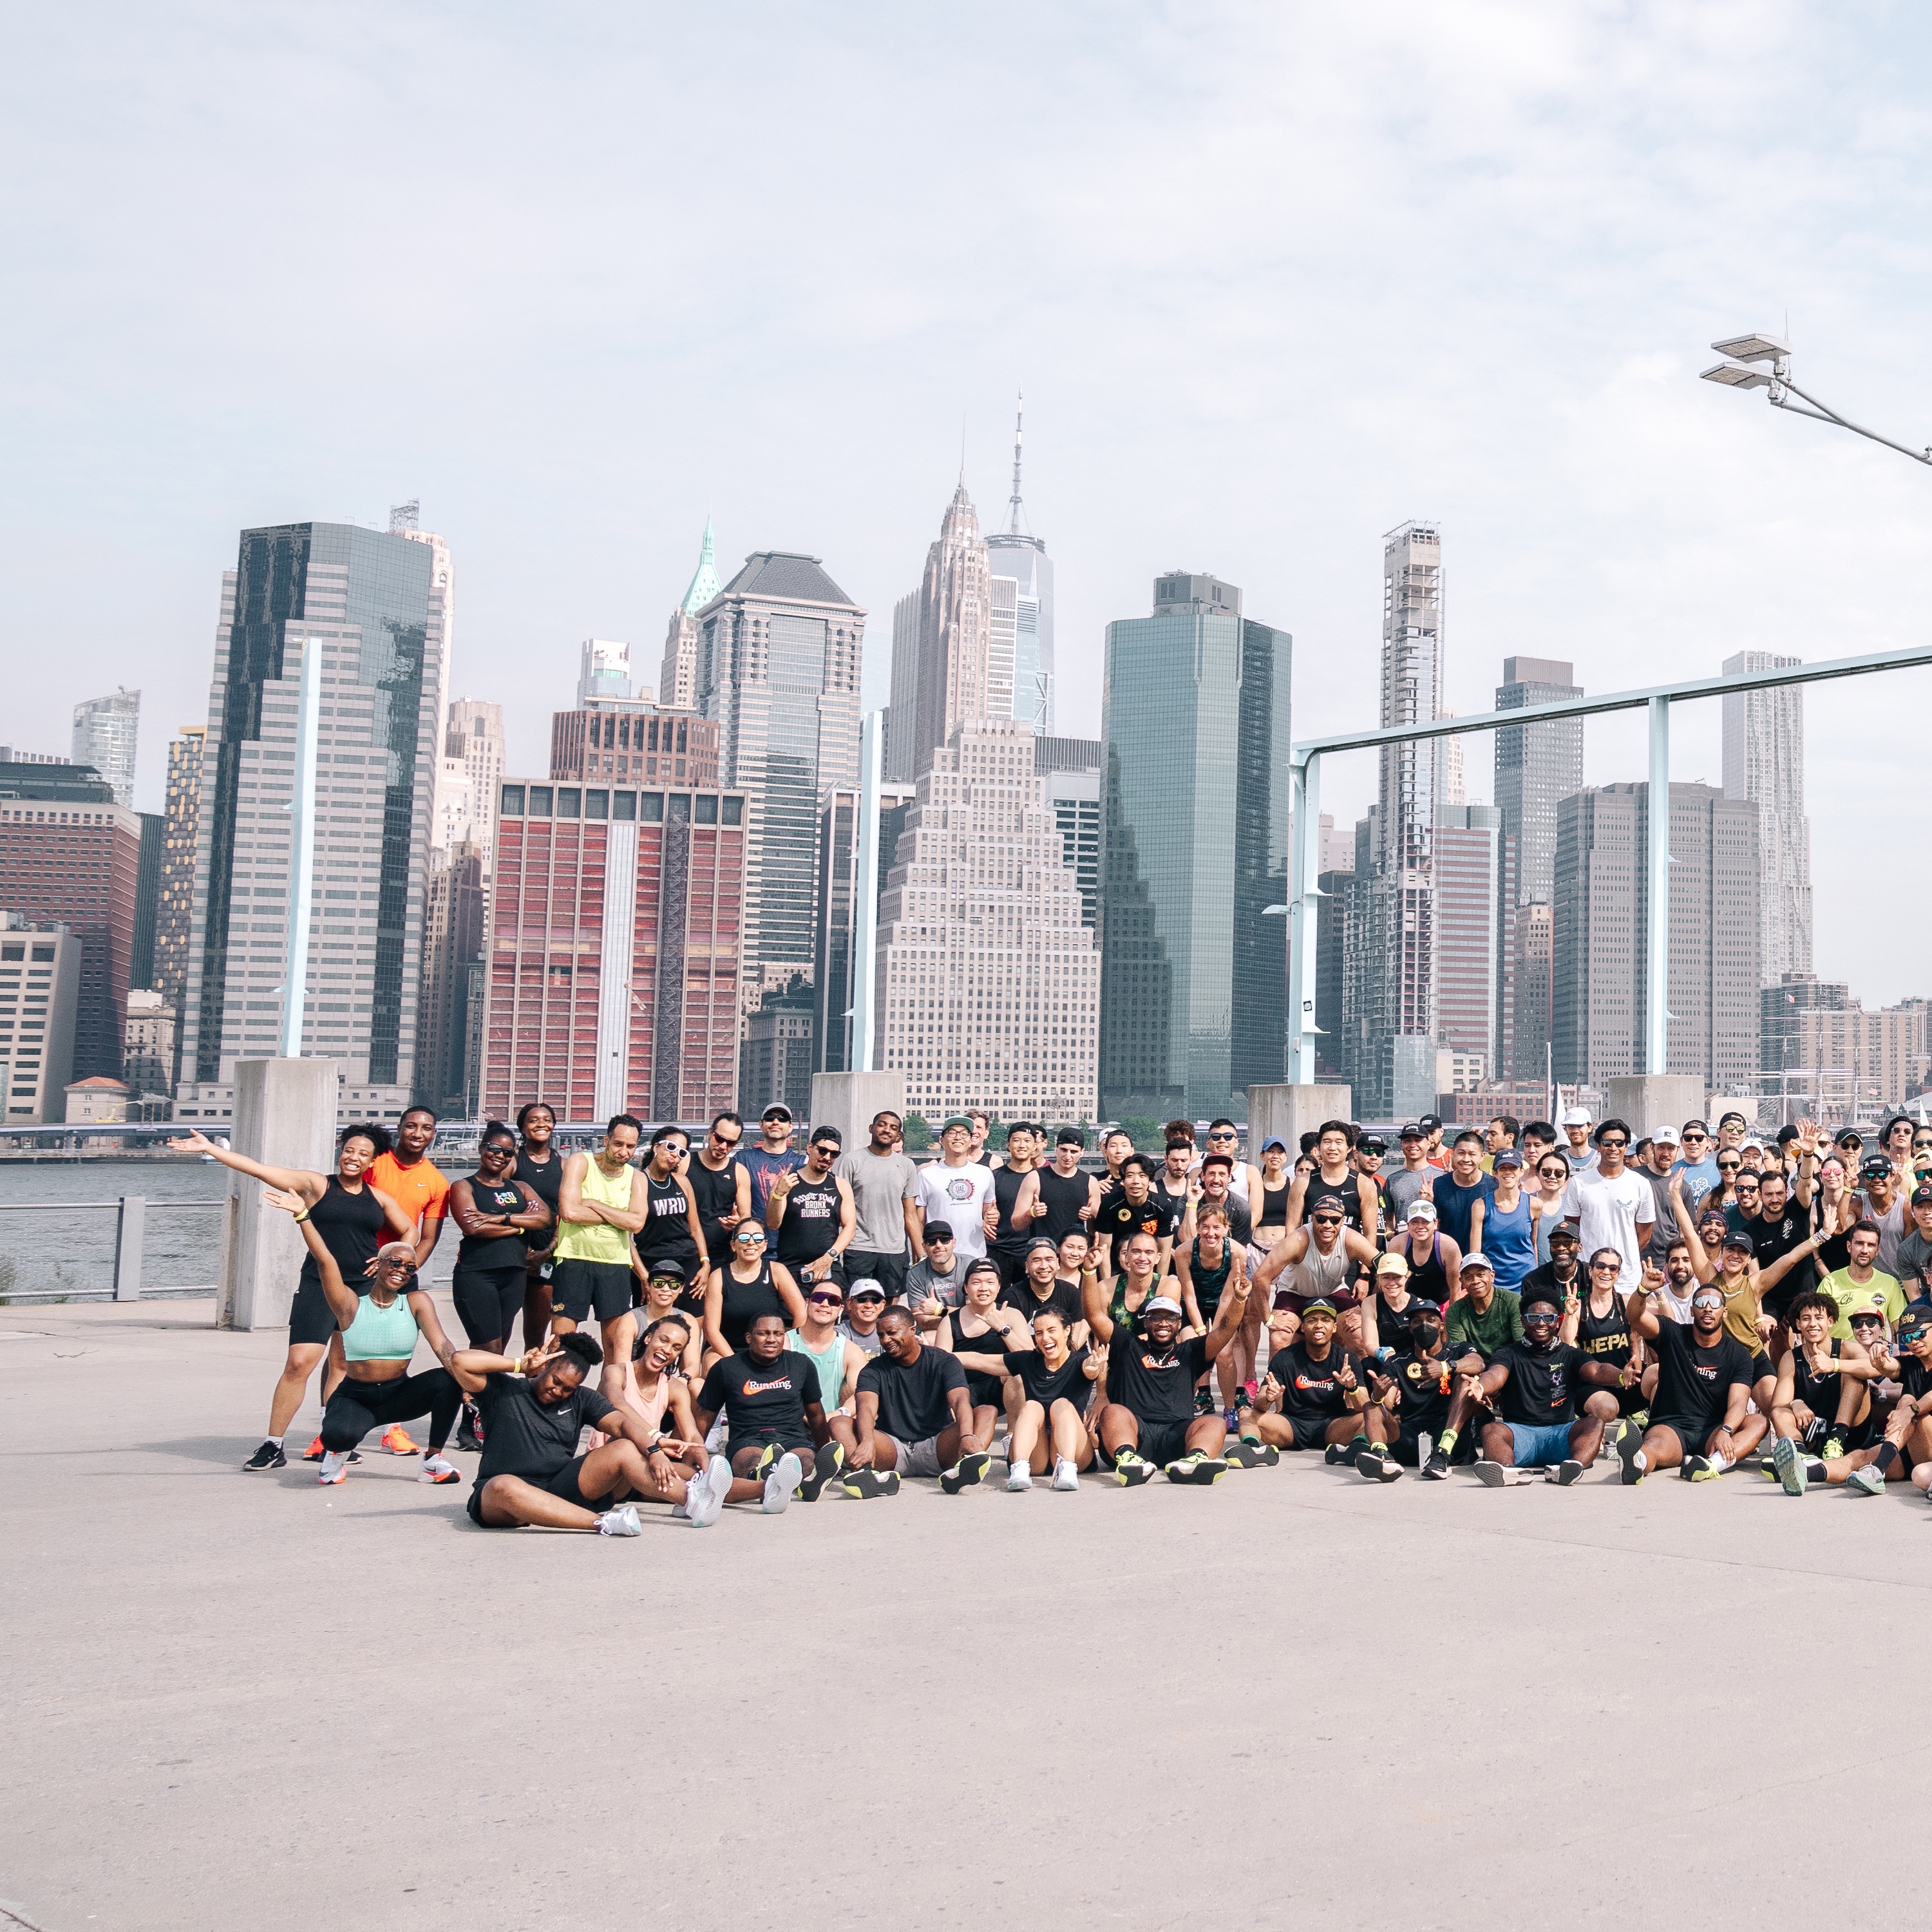 infinito brazo Por favor mira Nike NYC (@NikeNYC) / Twitter